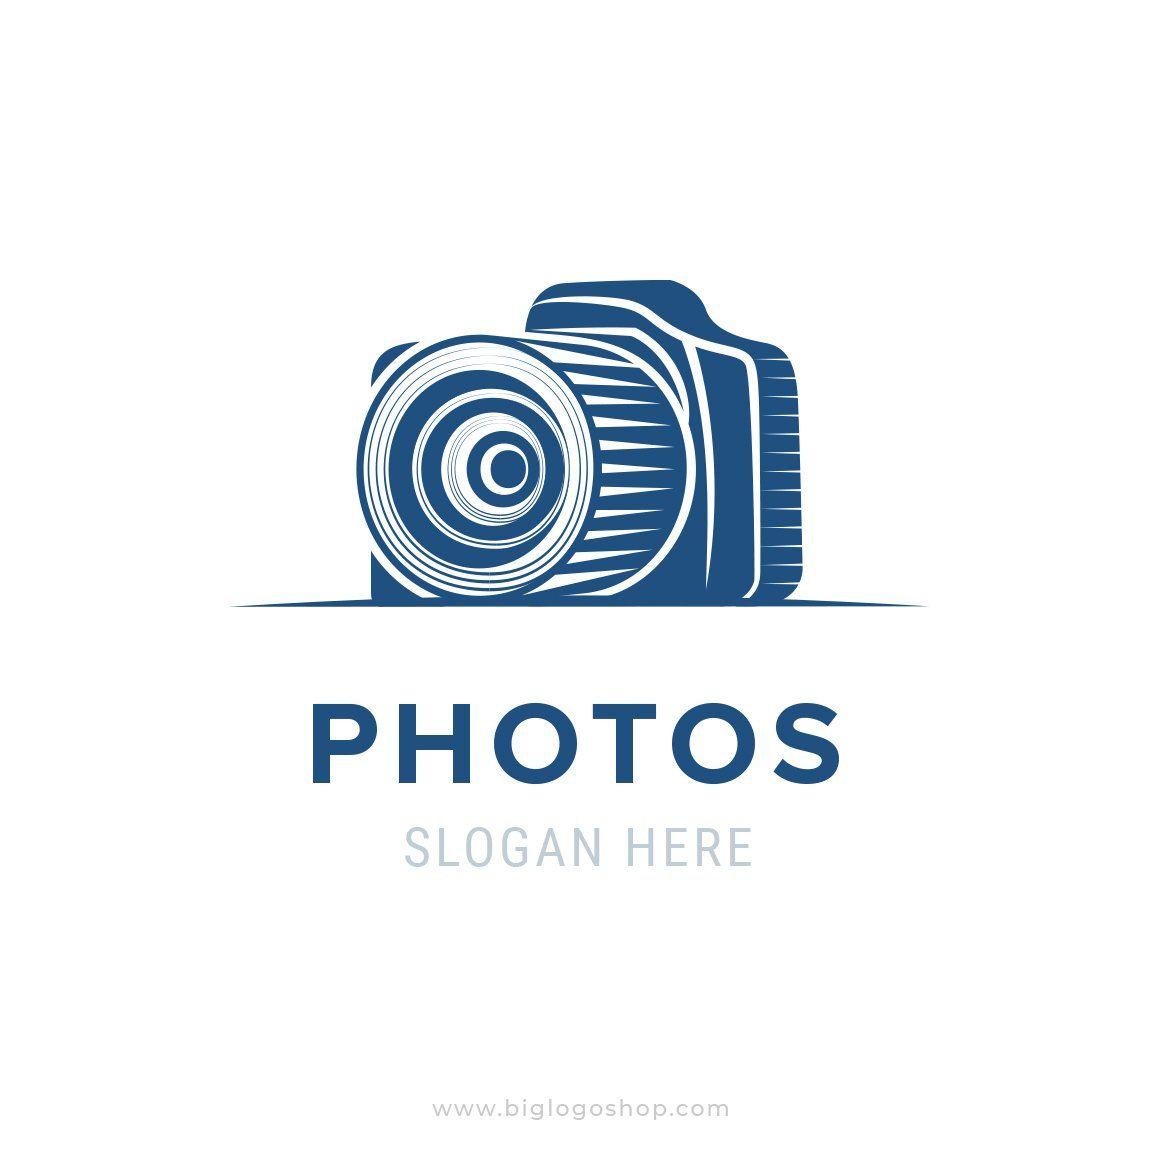 Photography Studio Logo - Photographer or photo studio logo design